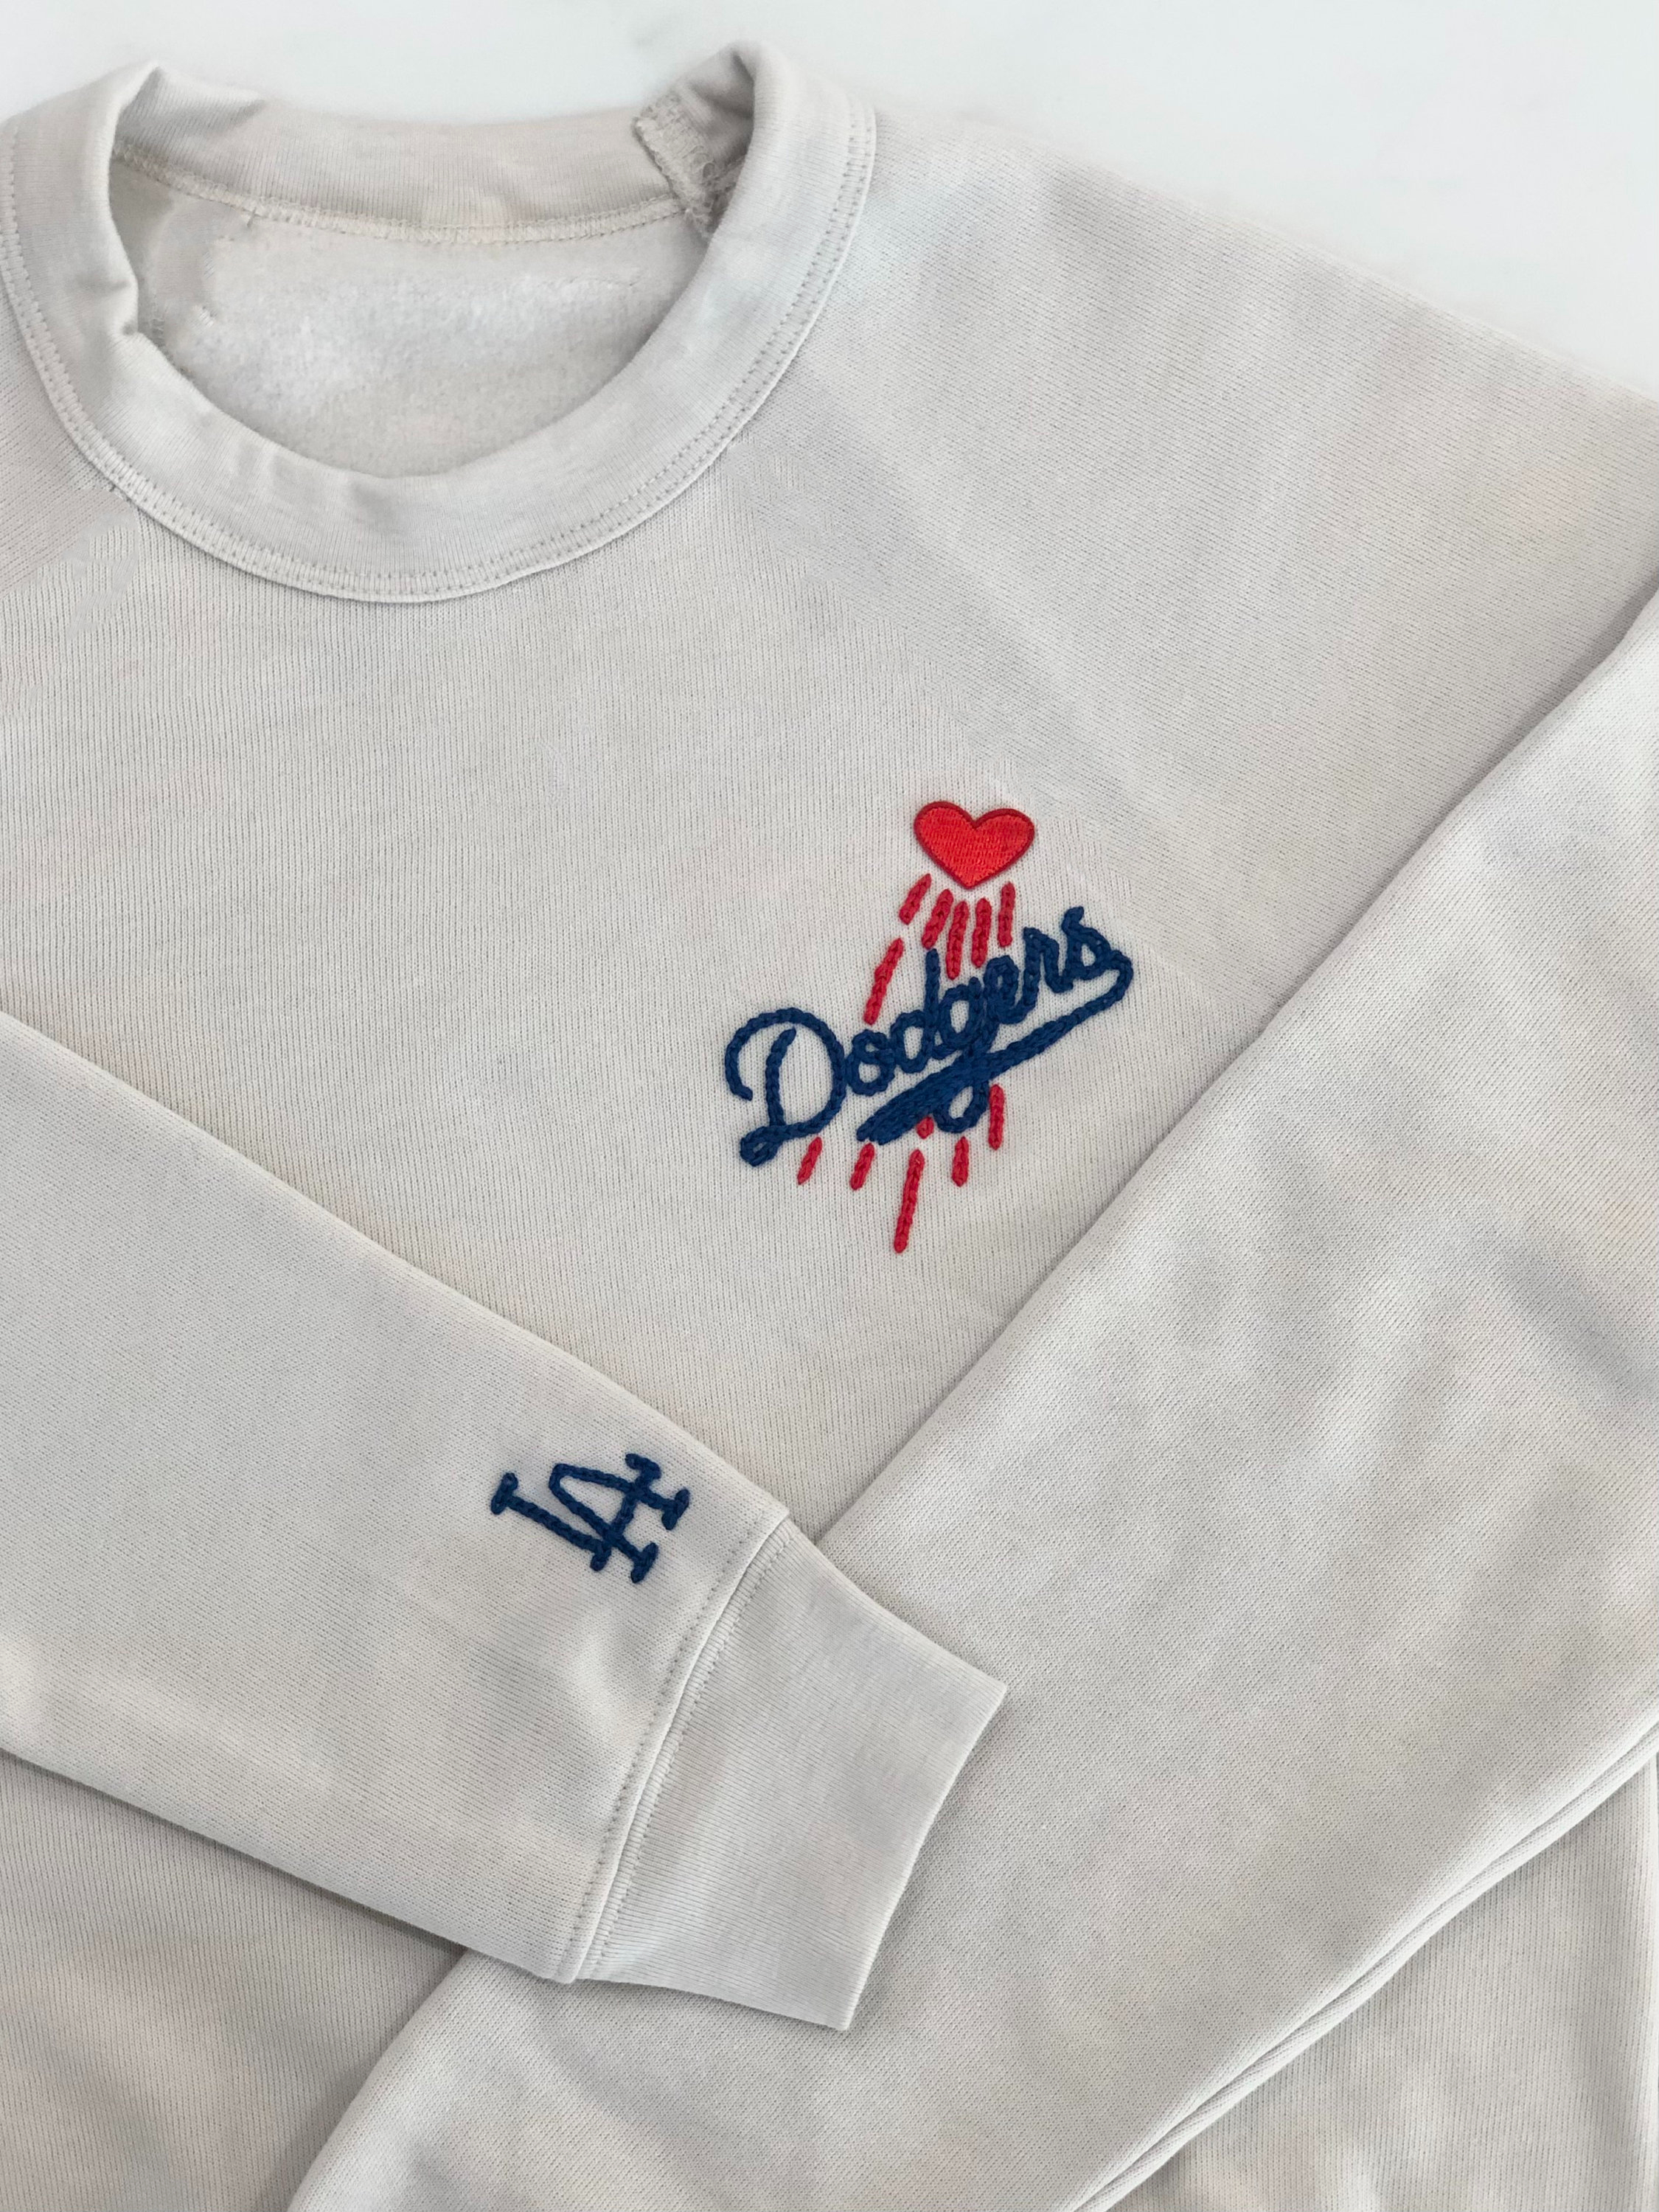 Dodgers Embroidered Raglan Crewneck Sweatshirt Unisex clothing